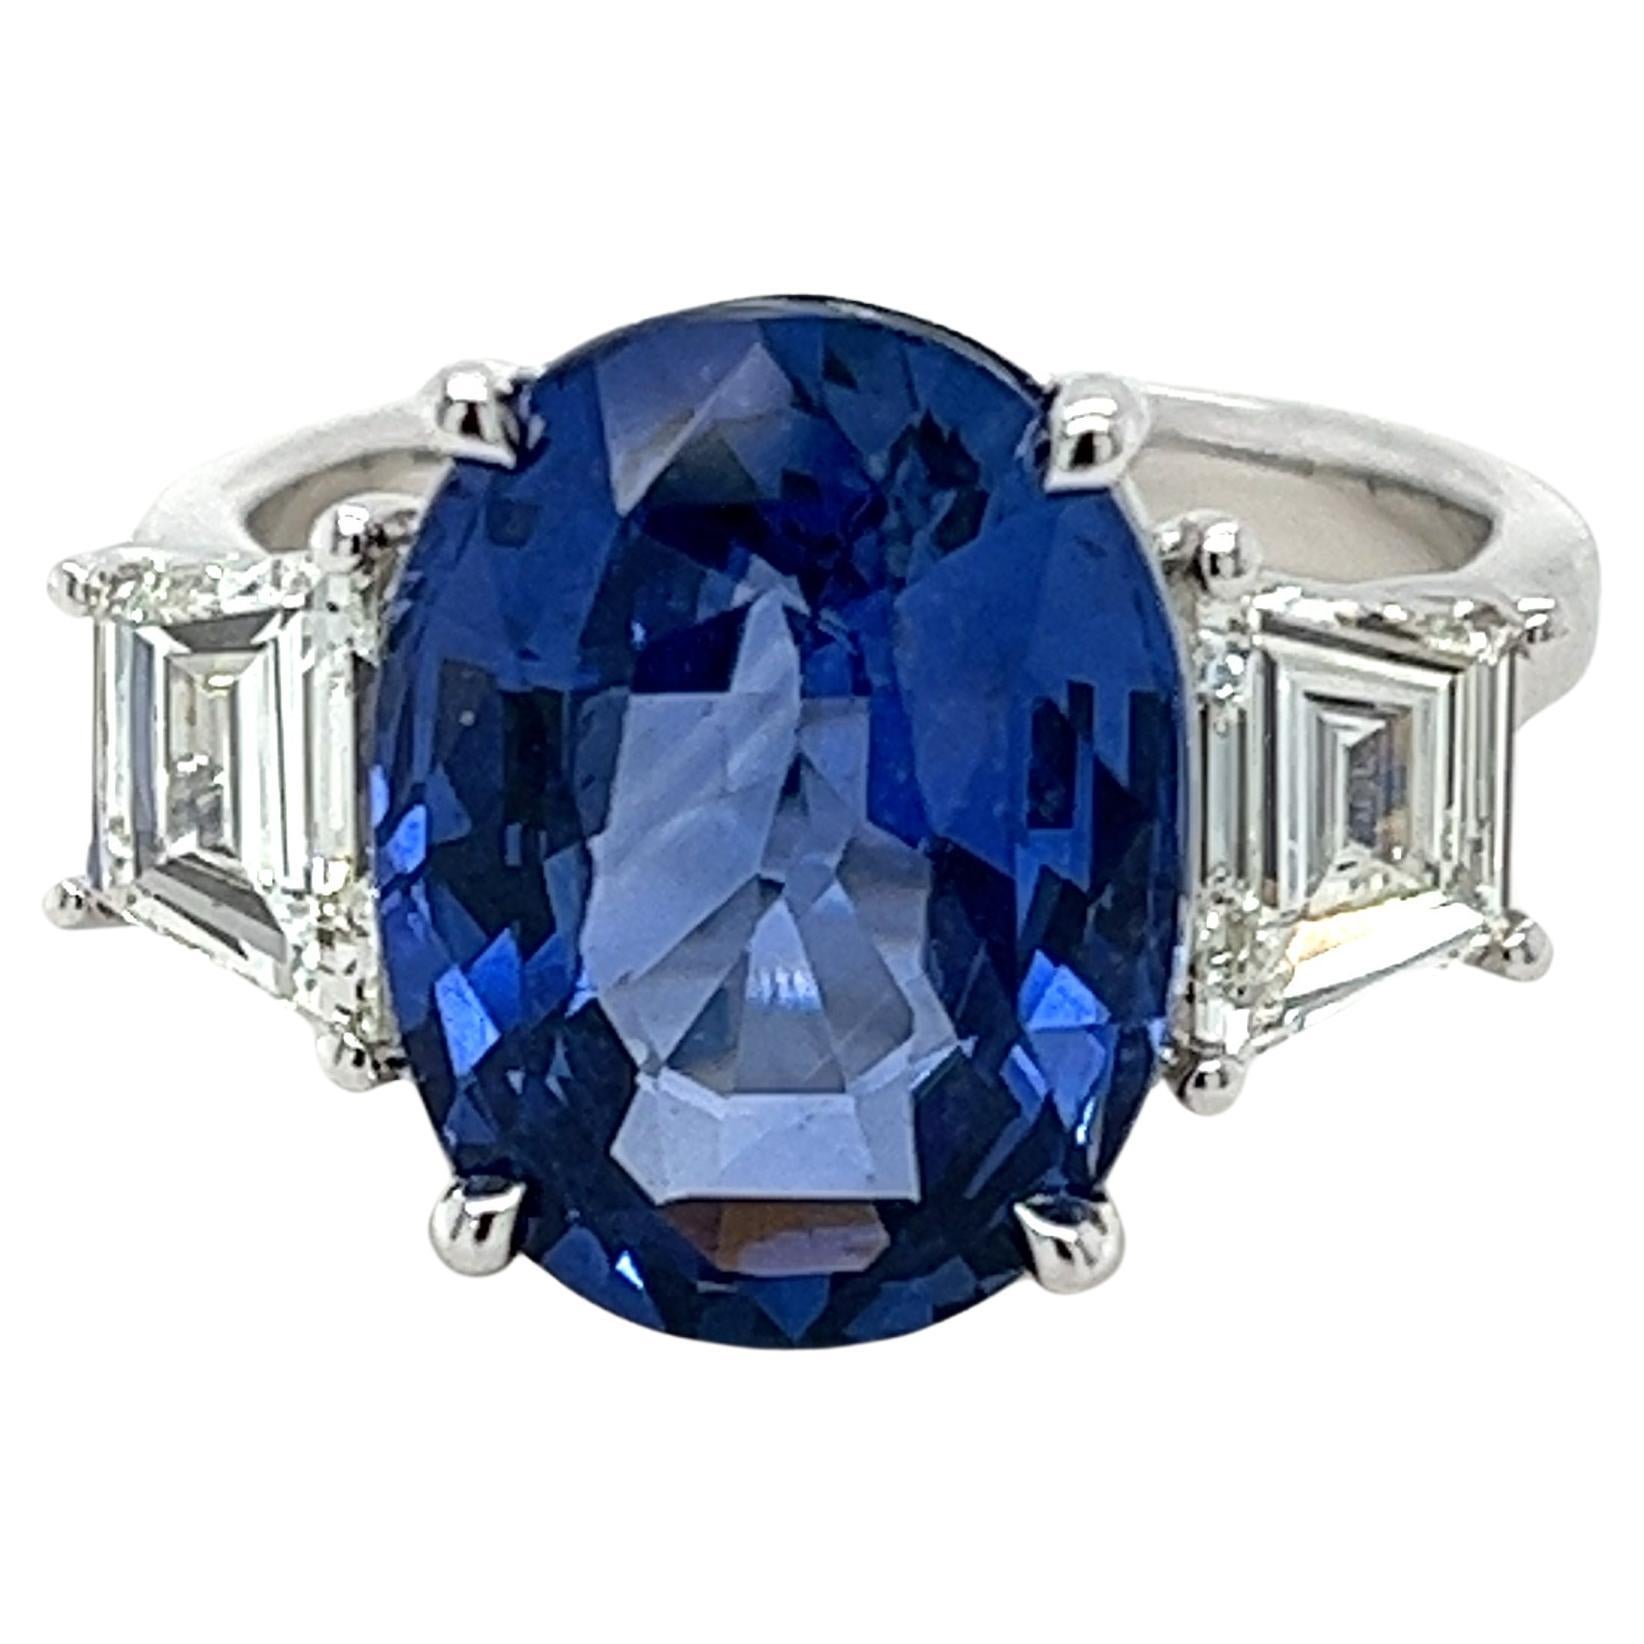 7.93 Carat Ceylon Sapphire & Diamond Ring in Platinum